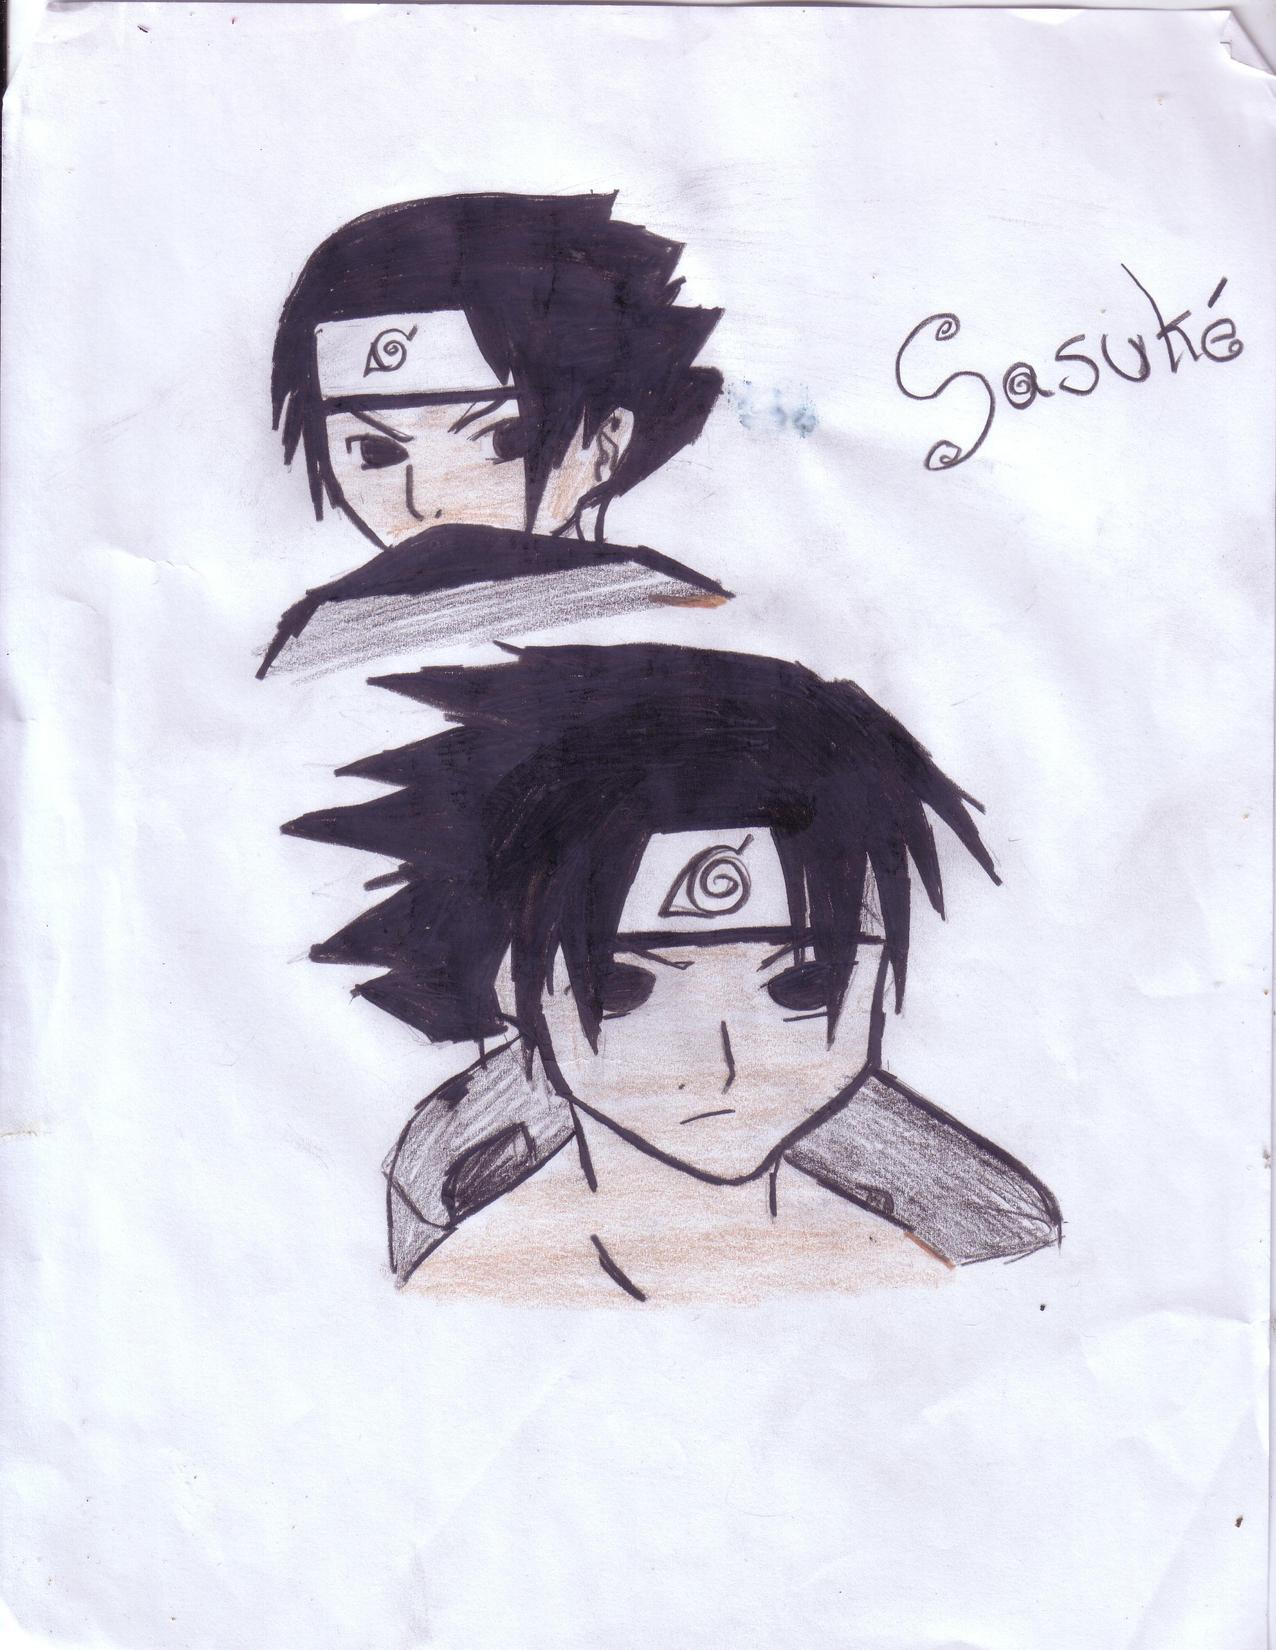 Sasuke collage by Fatal_dreamer